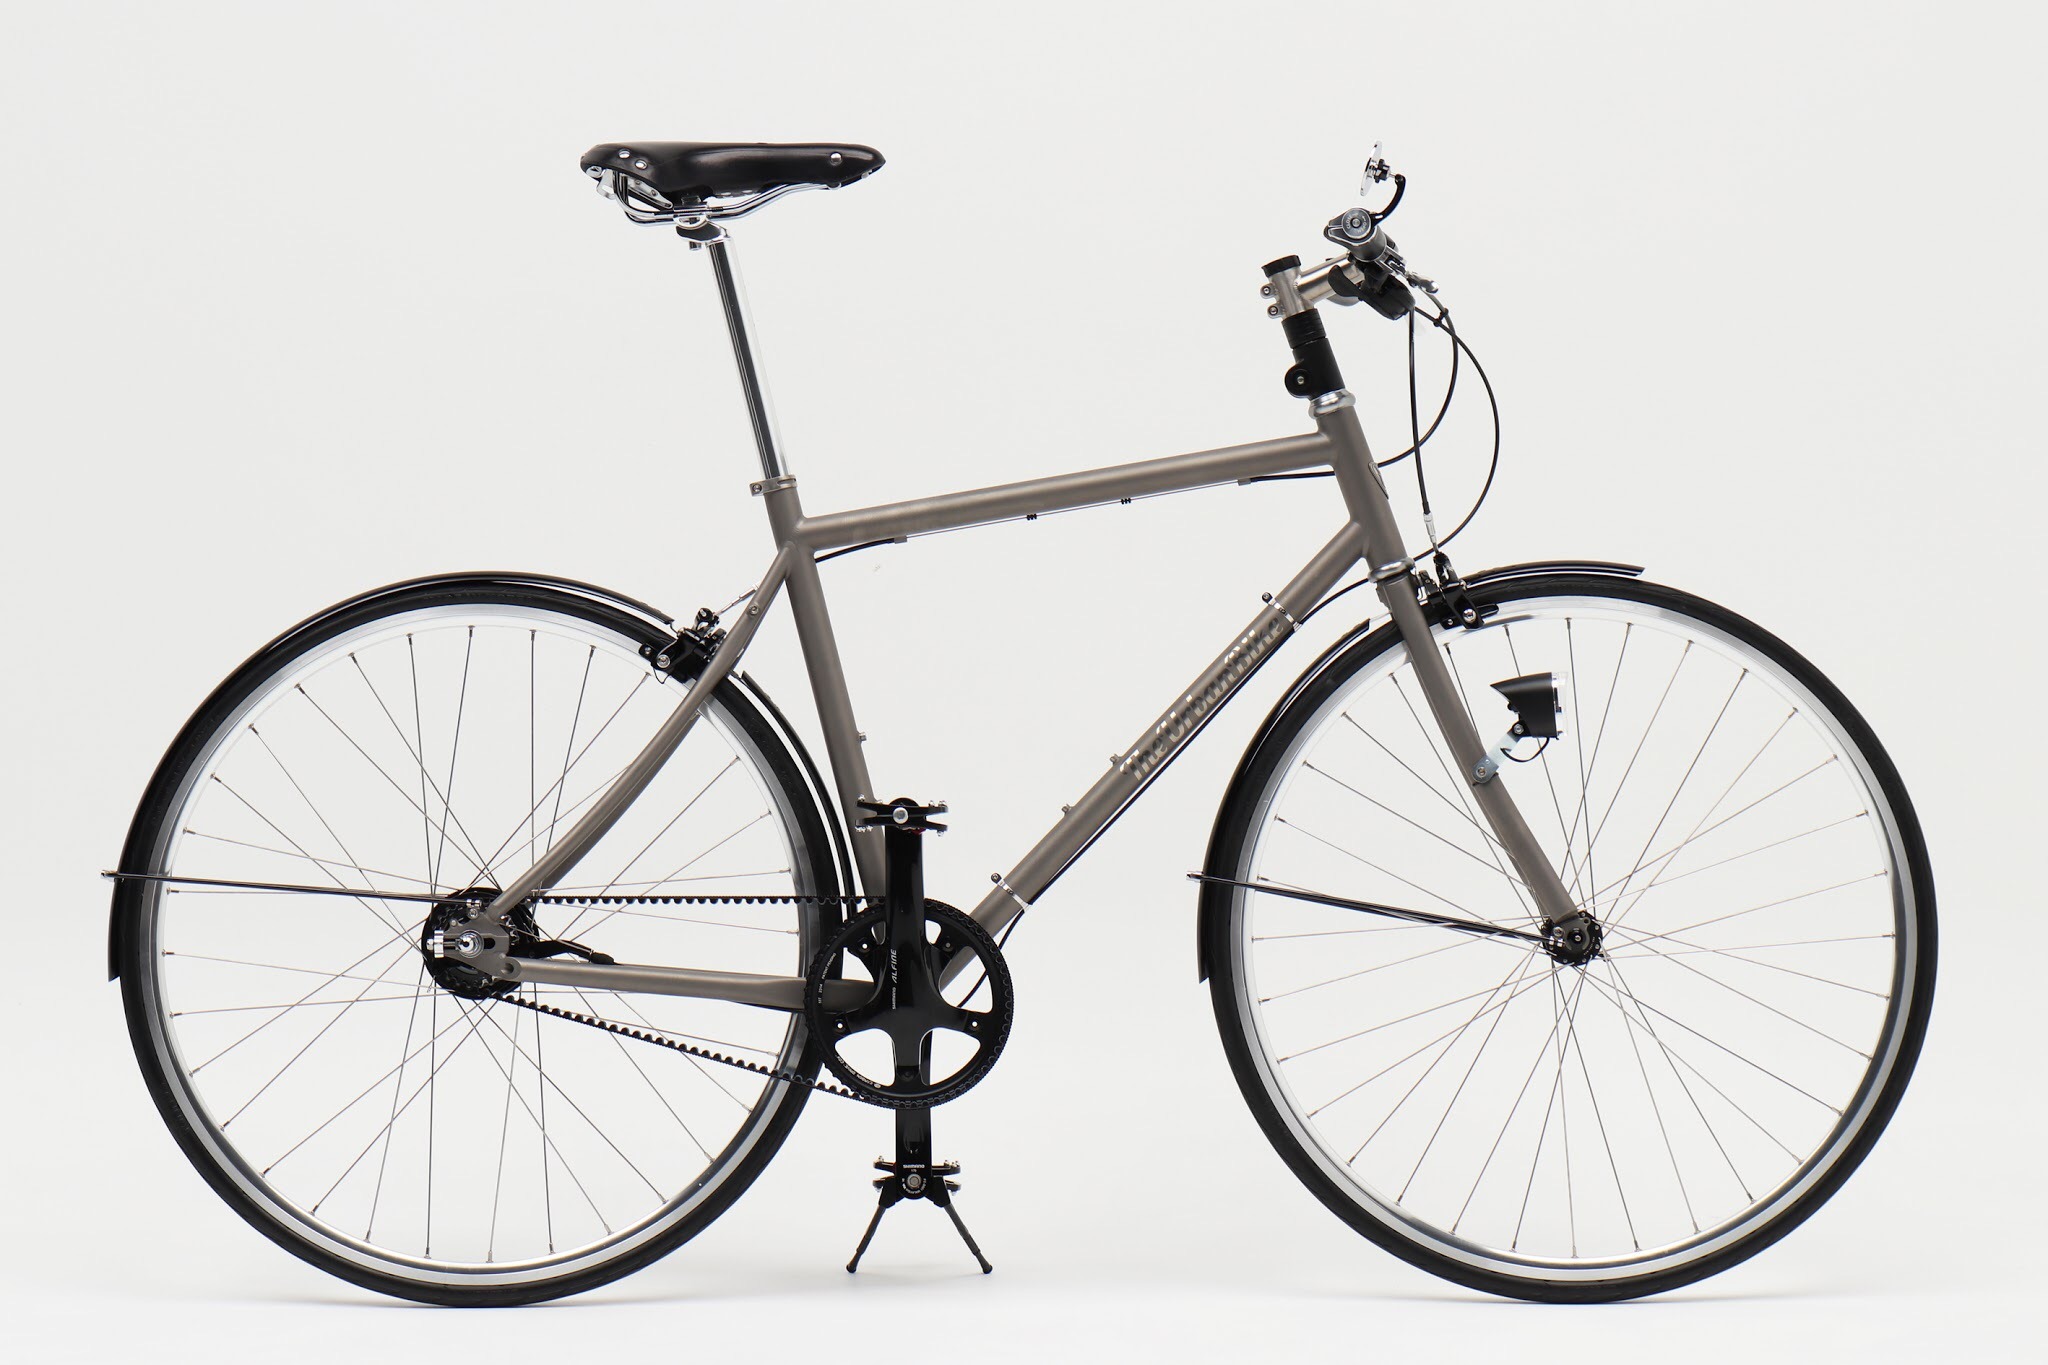 The Urban Bike City Rider titanium CT 1.2